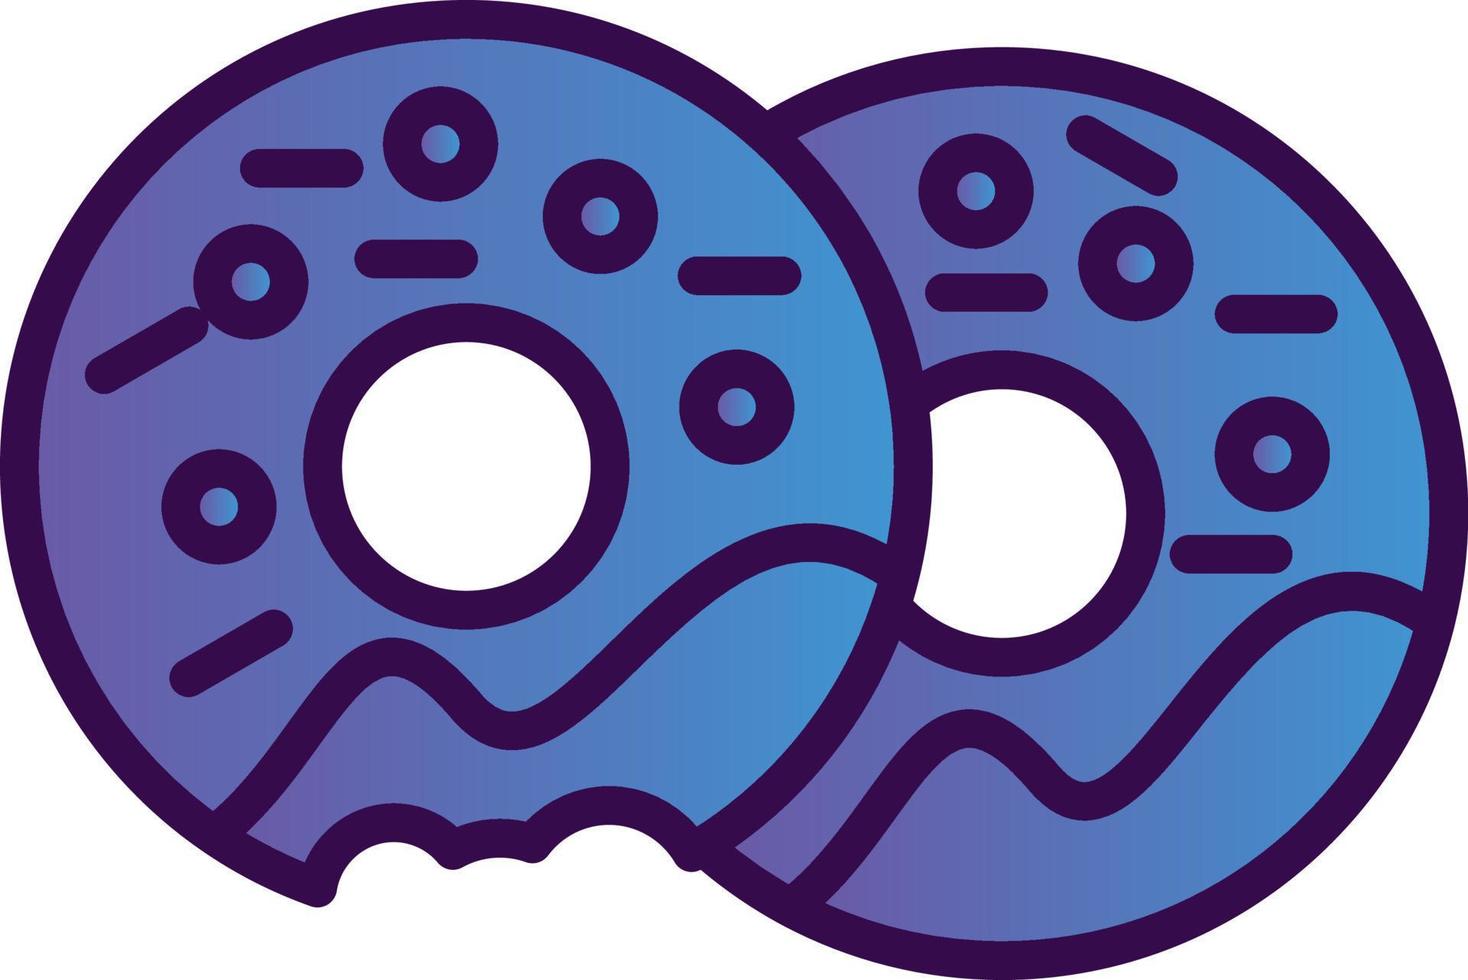 Donuts Vector Icon Design